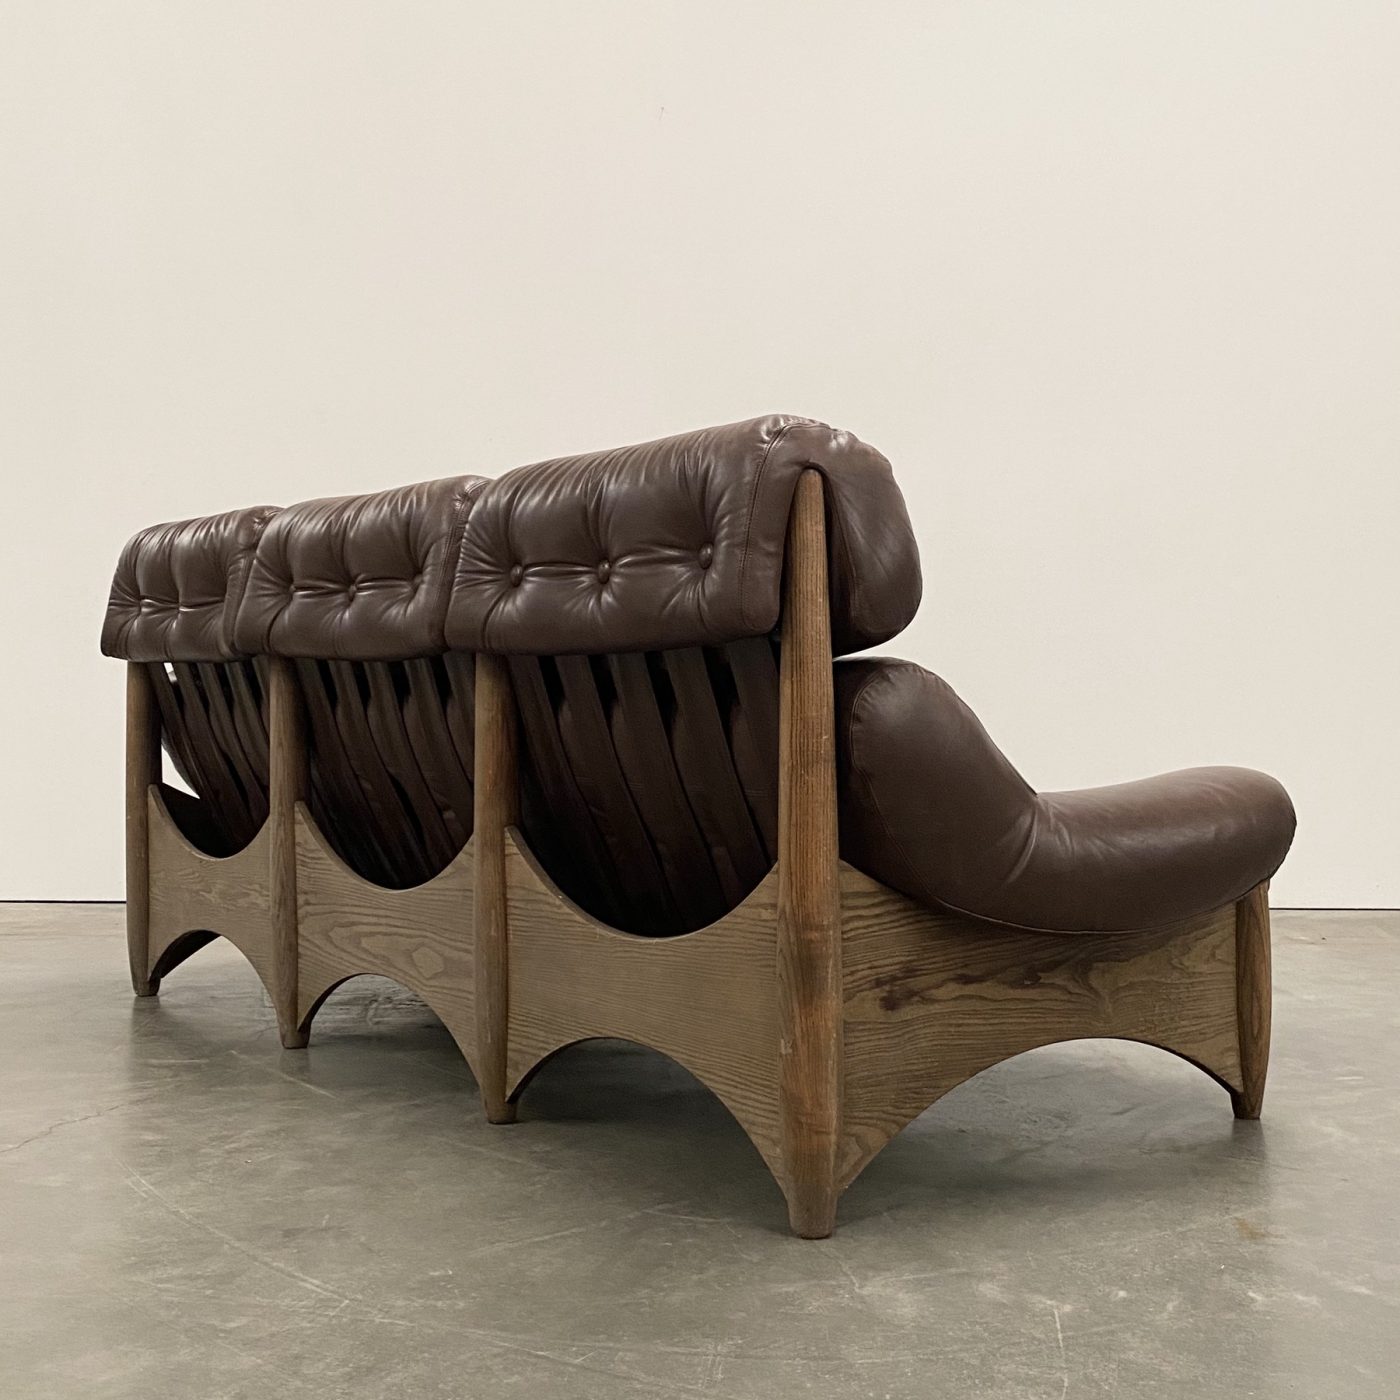 objet-vagabond-leather-sofa0001